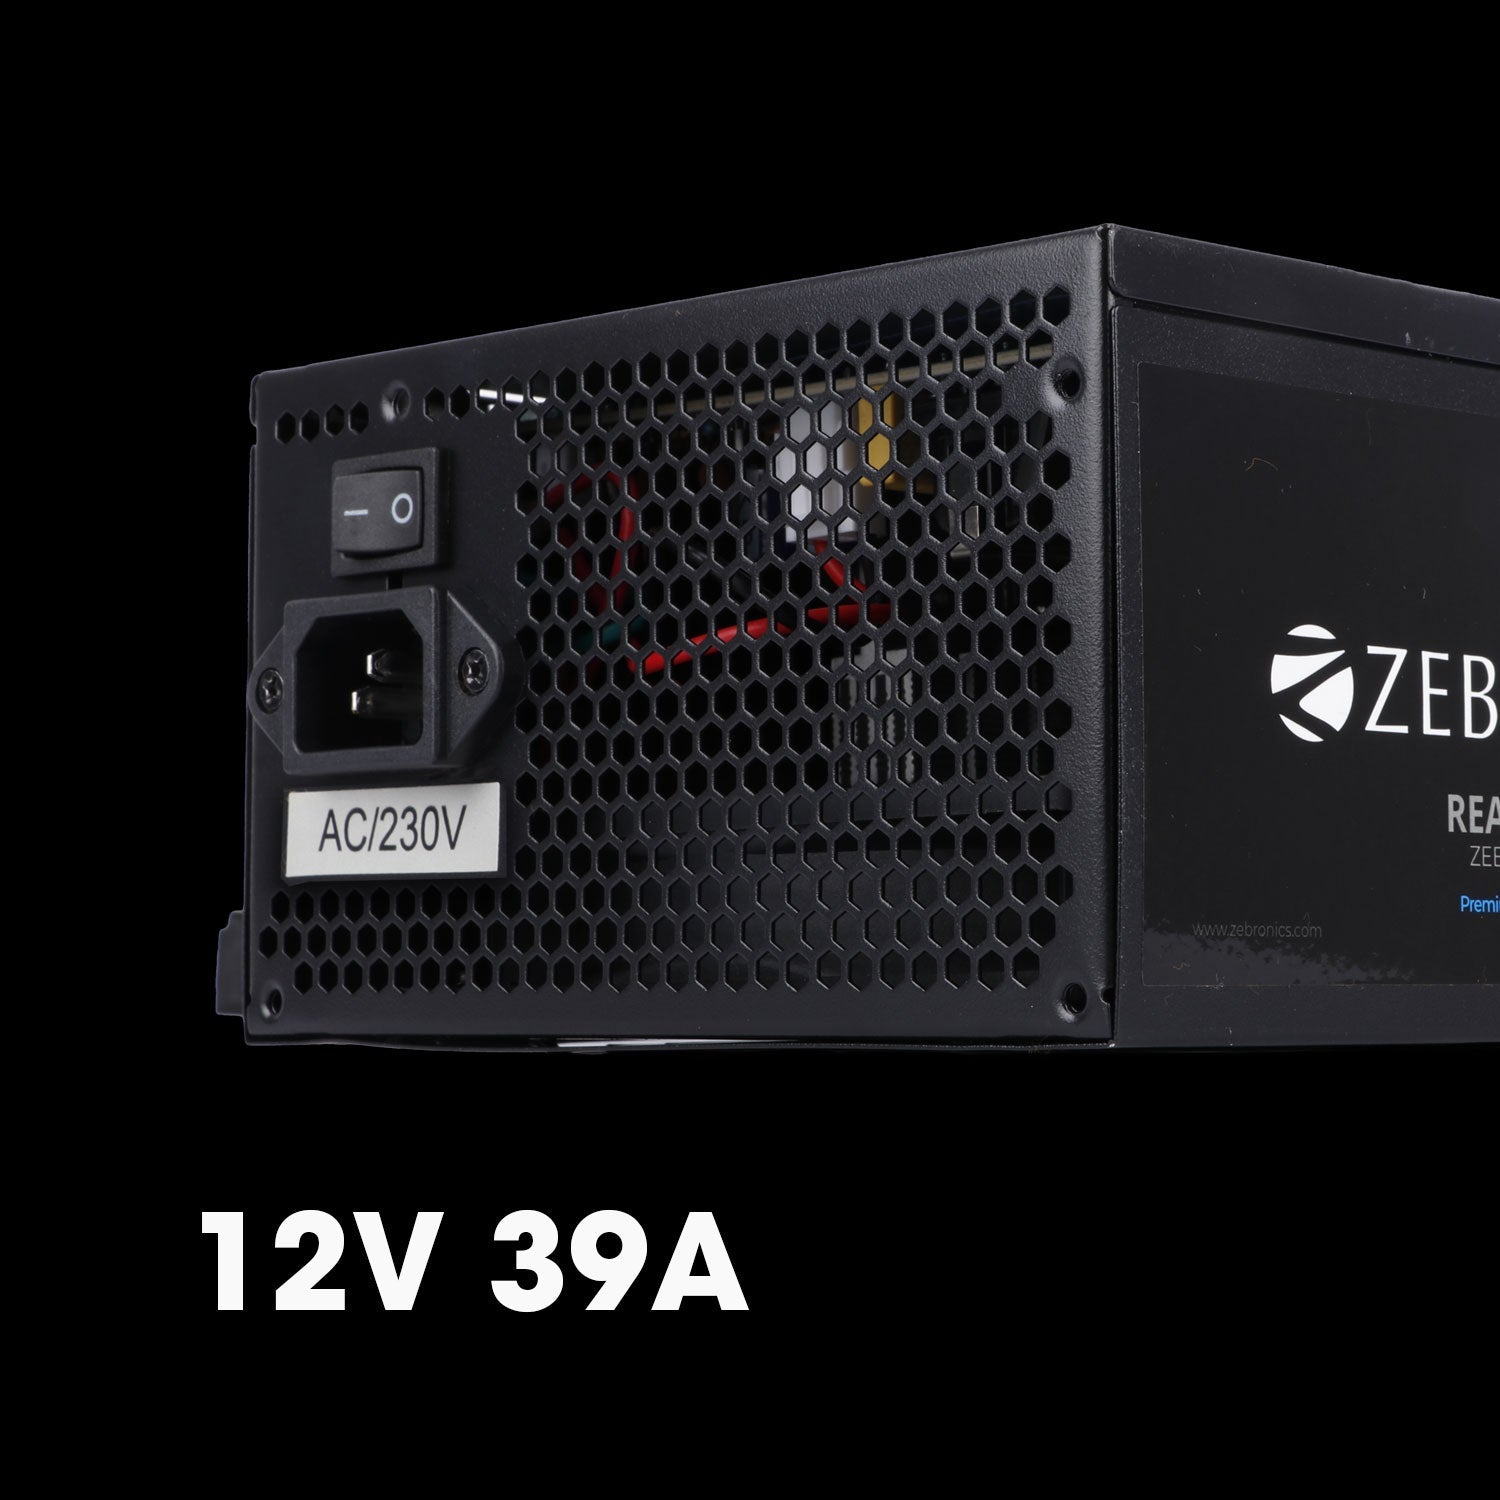 Zeb-PGP550W (80 Plus) - Premium Power Supply - Zebronics